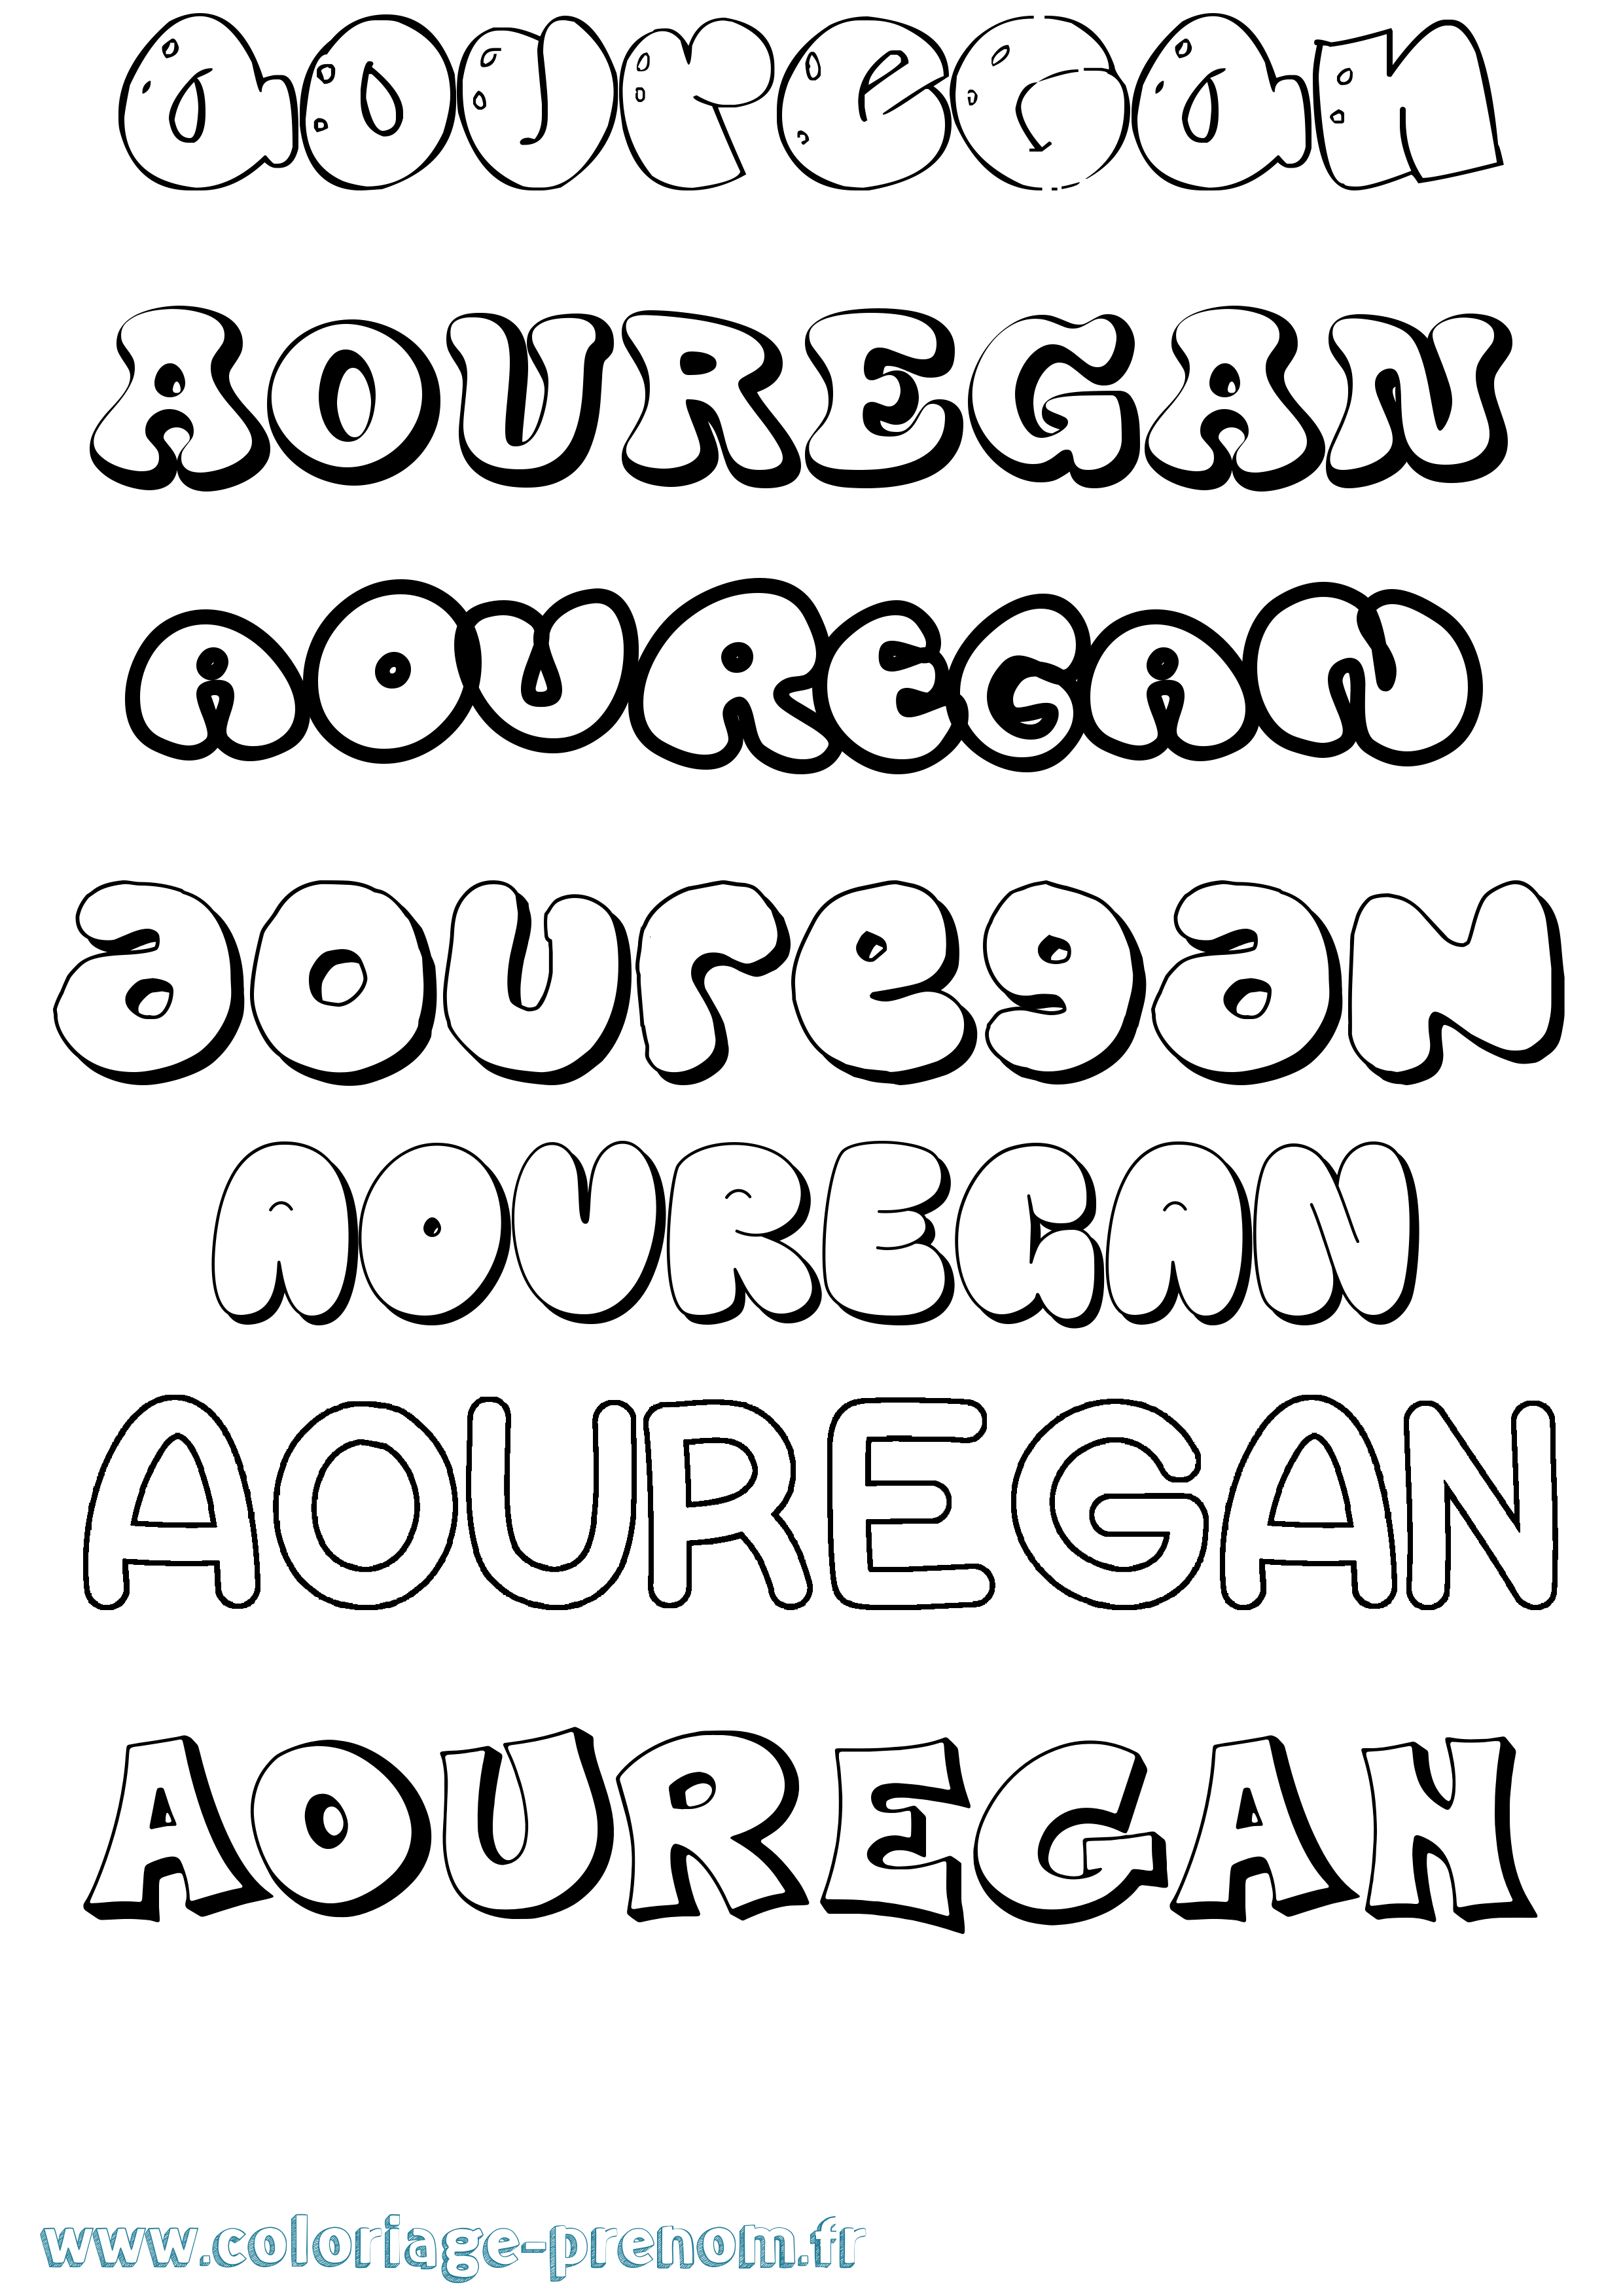 Coloriage prénom Aouregan Bubble